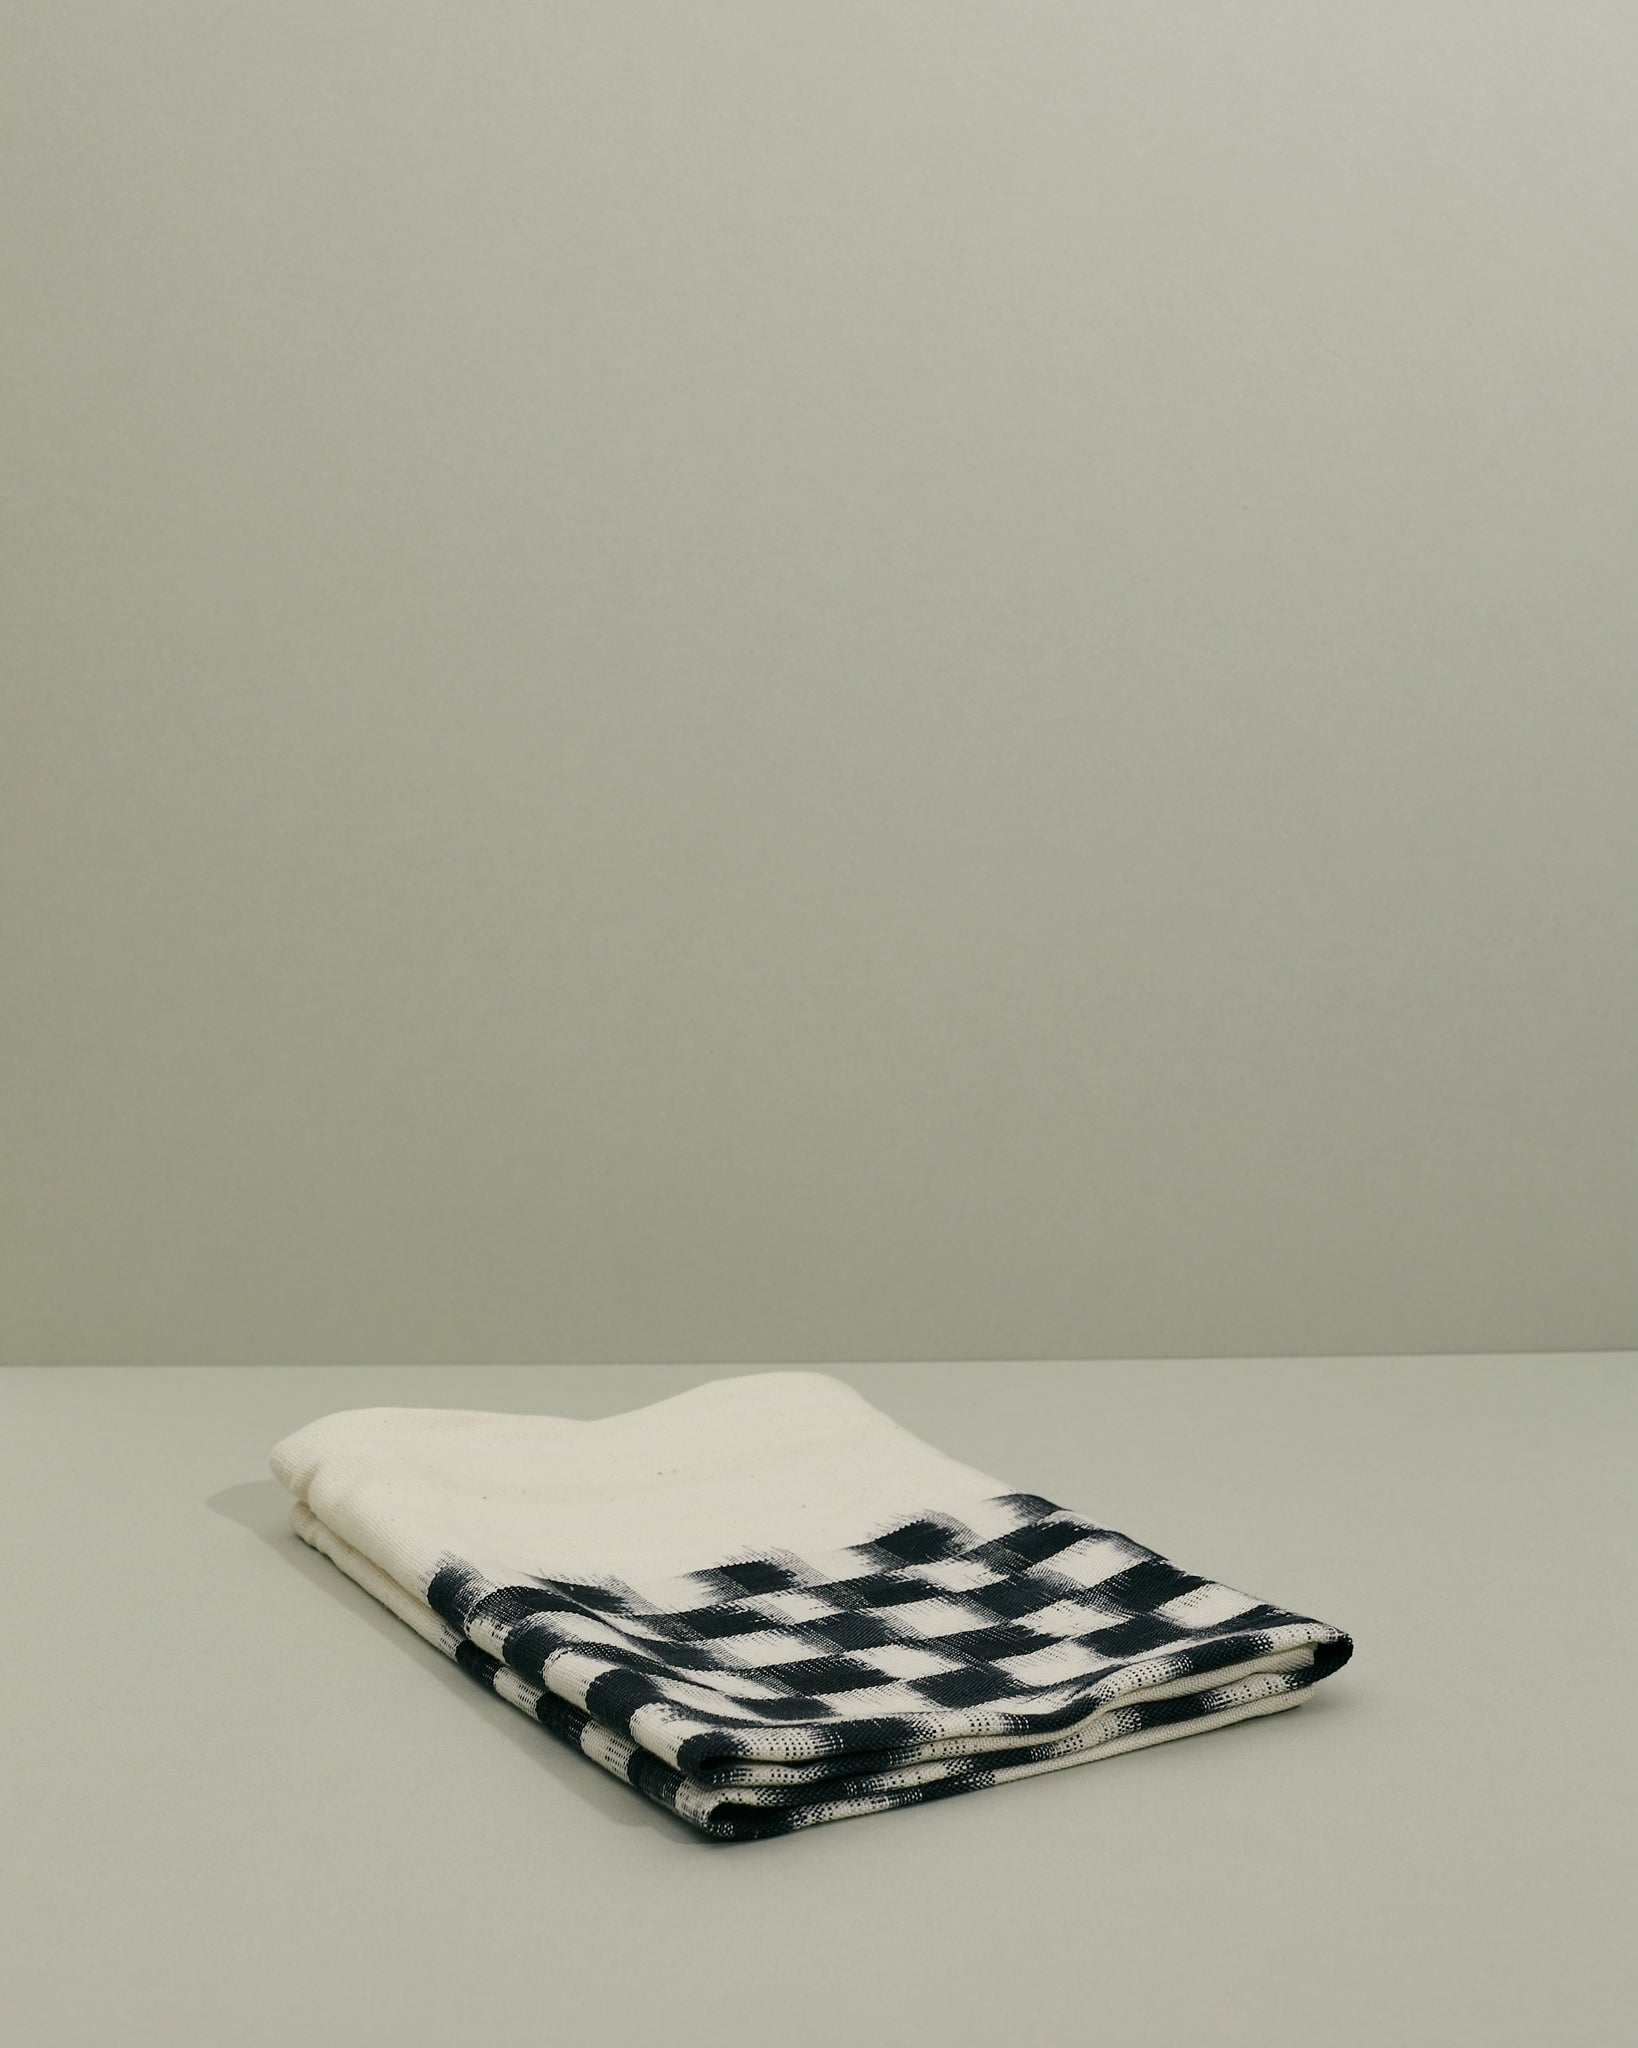 Handwoven Cotton Ikat Tea Towel - Black Check